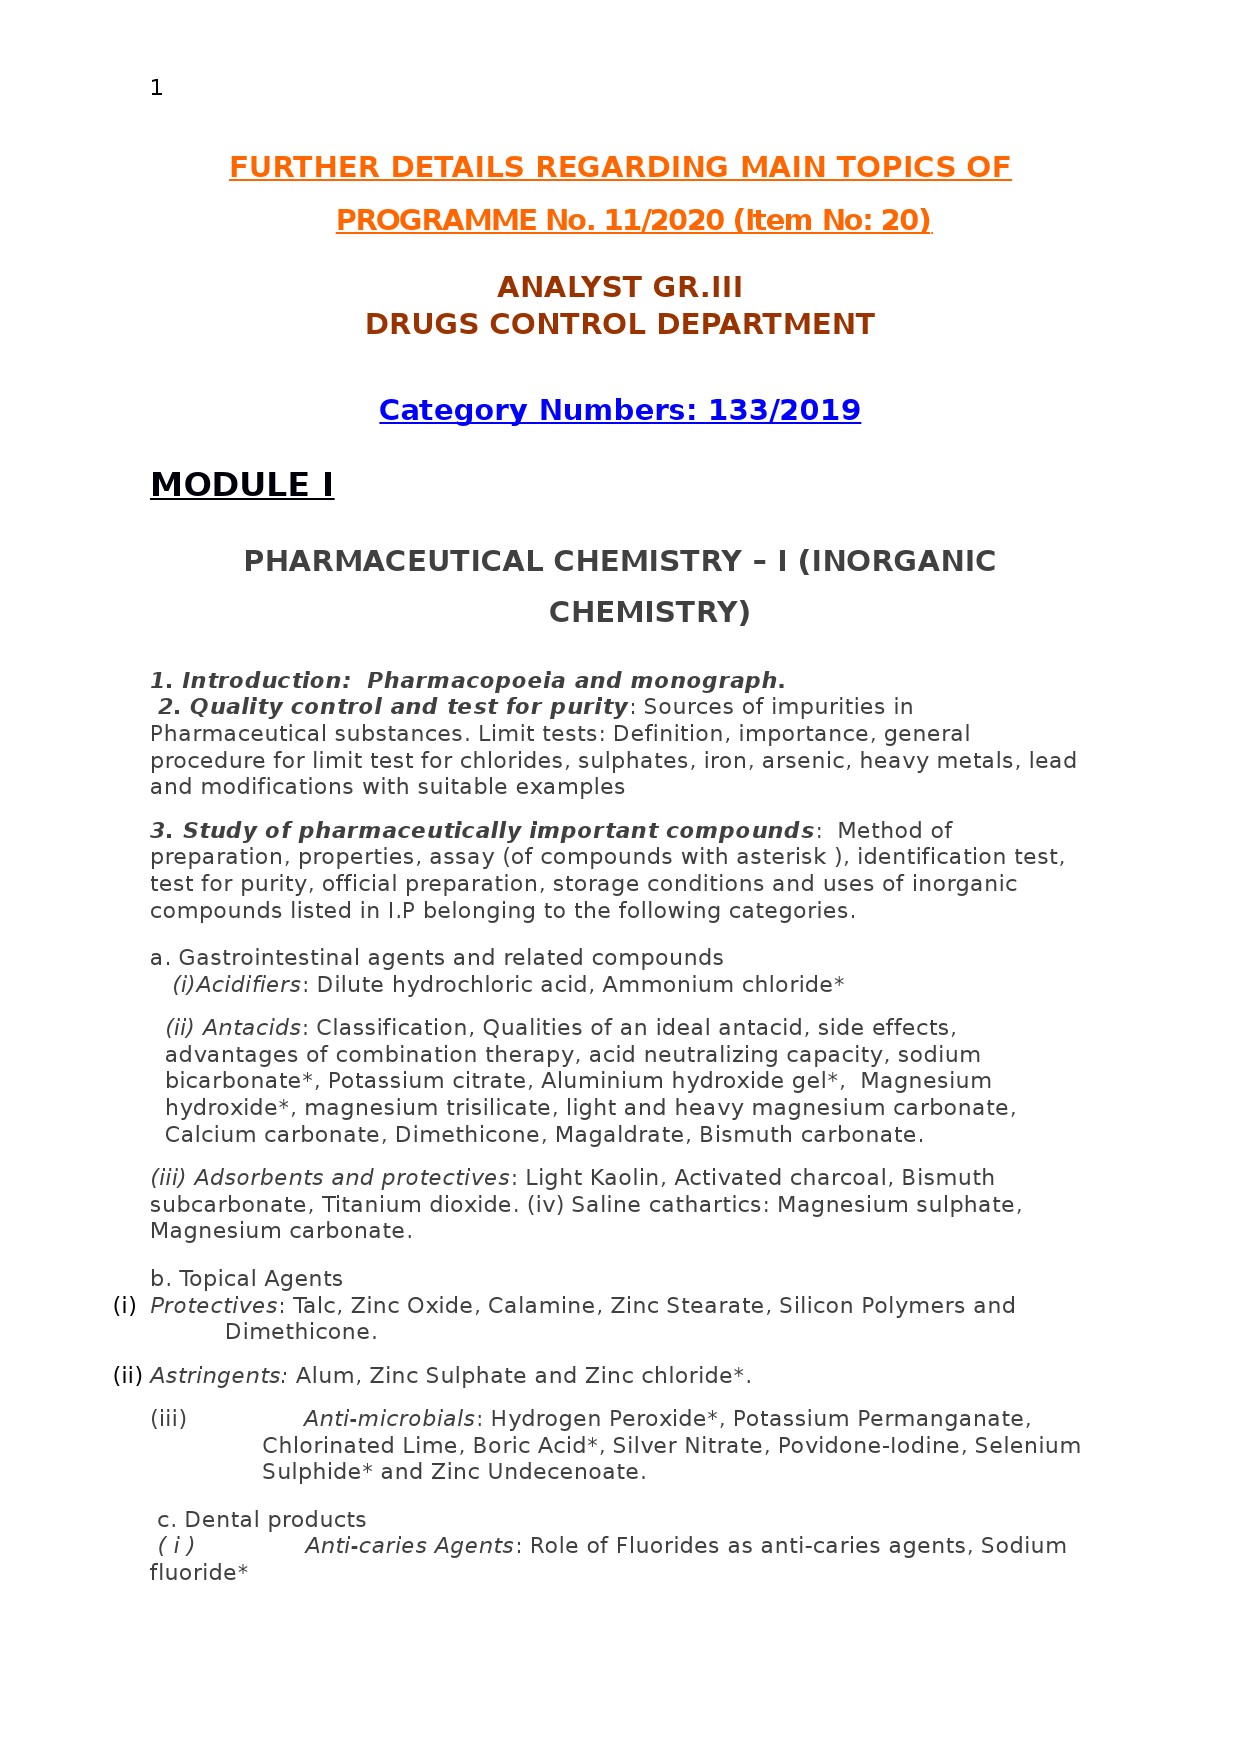 KPSC Syllabus For Analyst Grade III Drugs Control Department - Notification Image 1